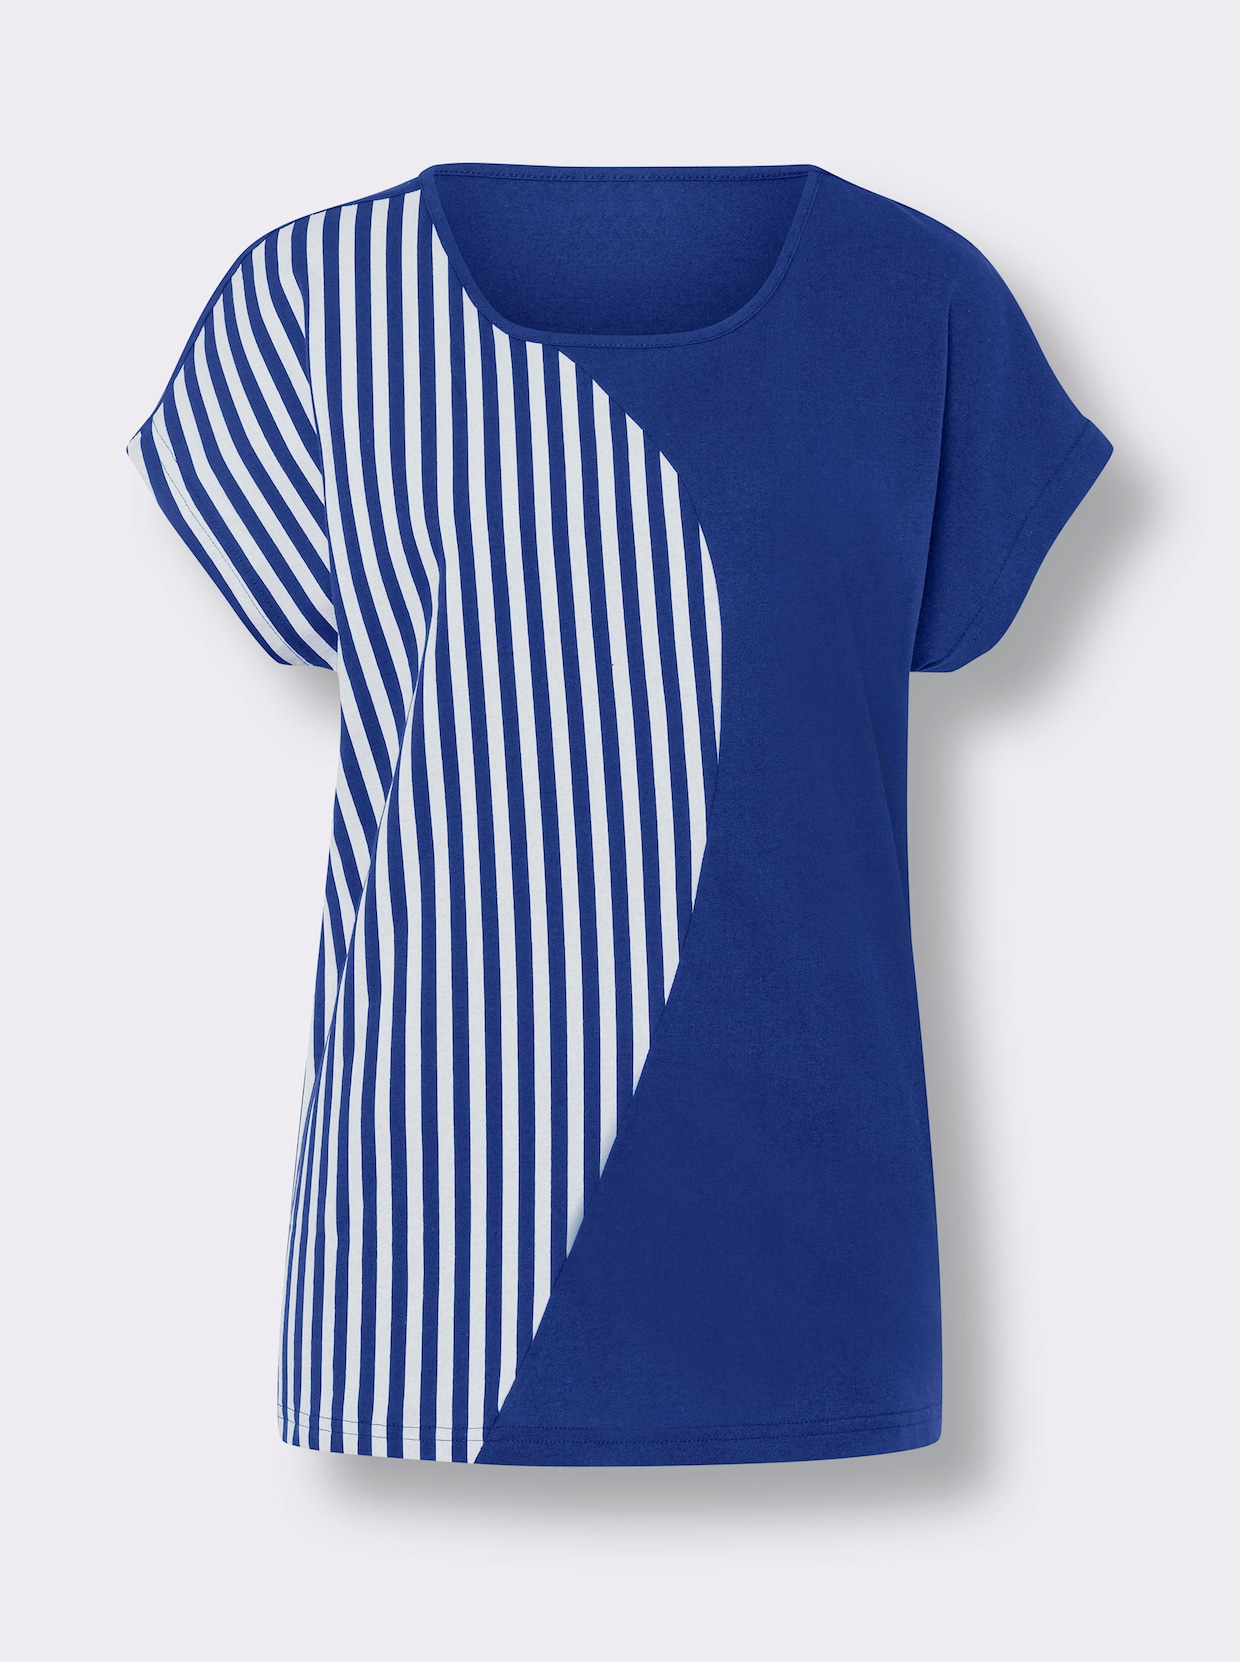 Proužkované tričko - královská modrá-bílá